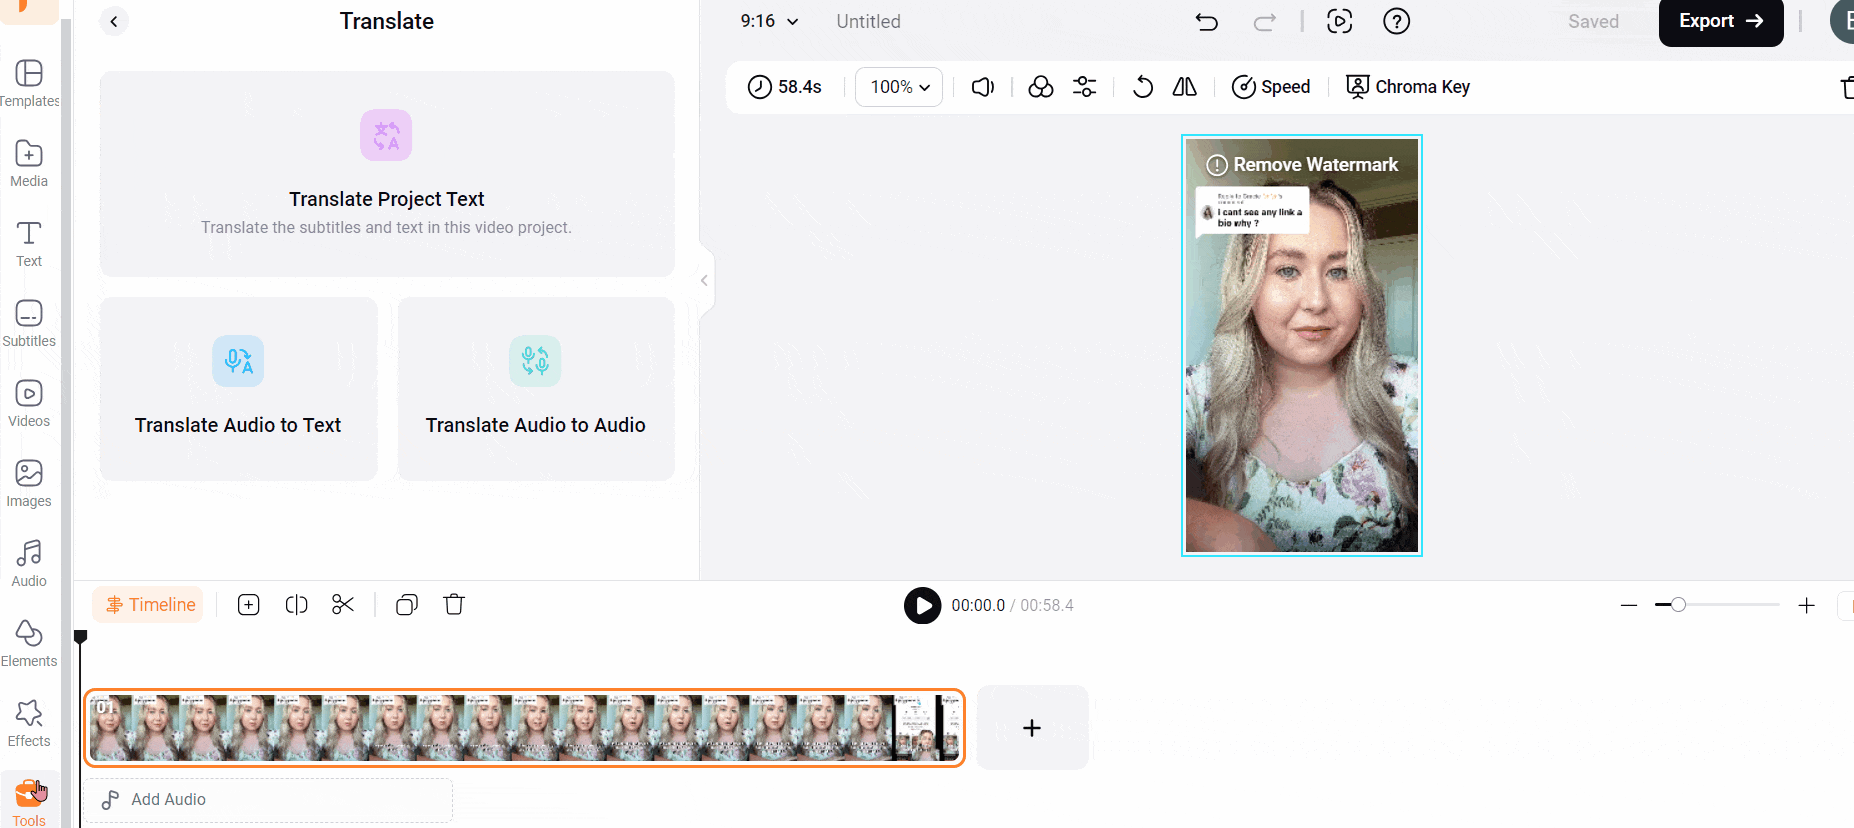 FlexClip - AI video translator allows you to translate your videos. GIF showing how to translate your video using AI.